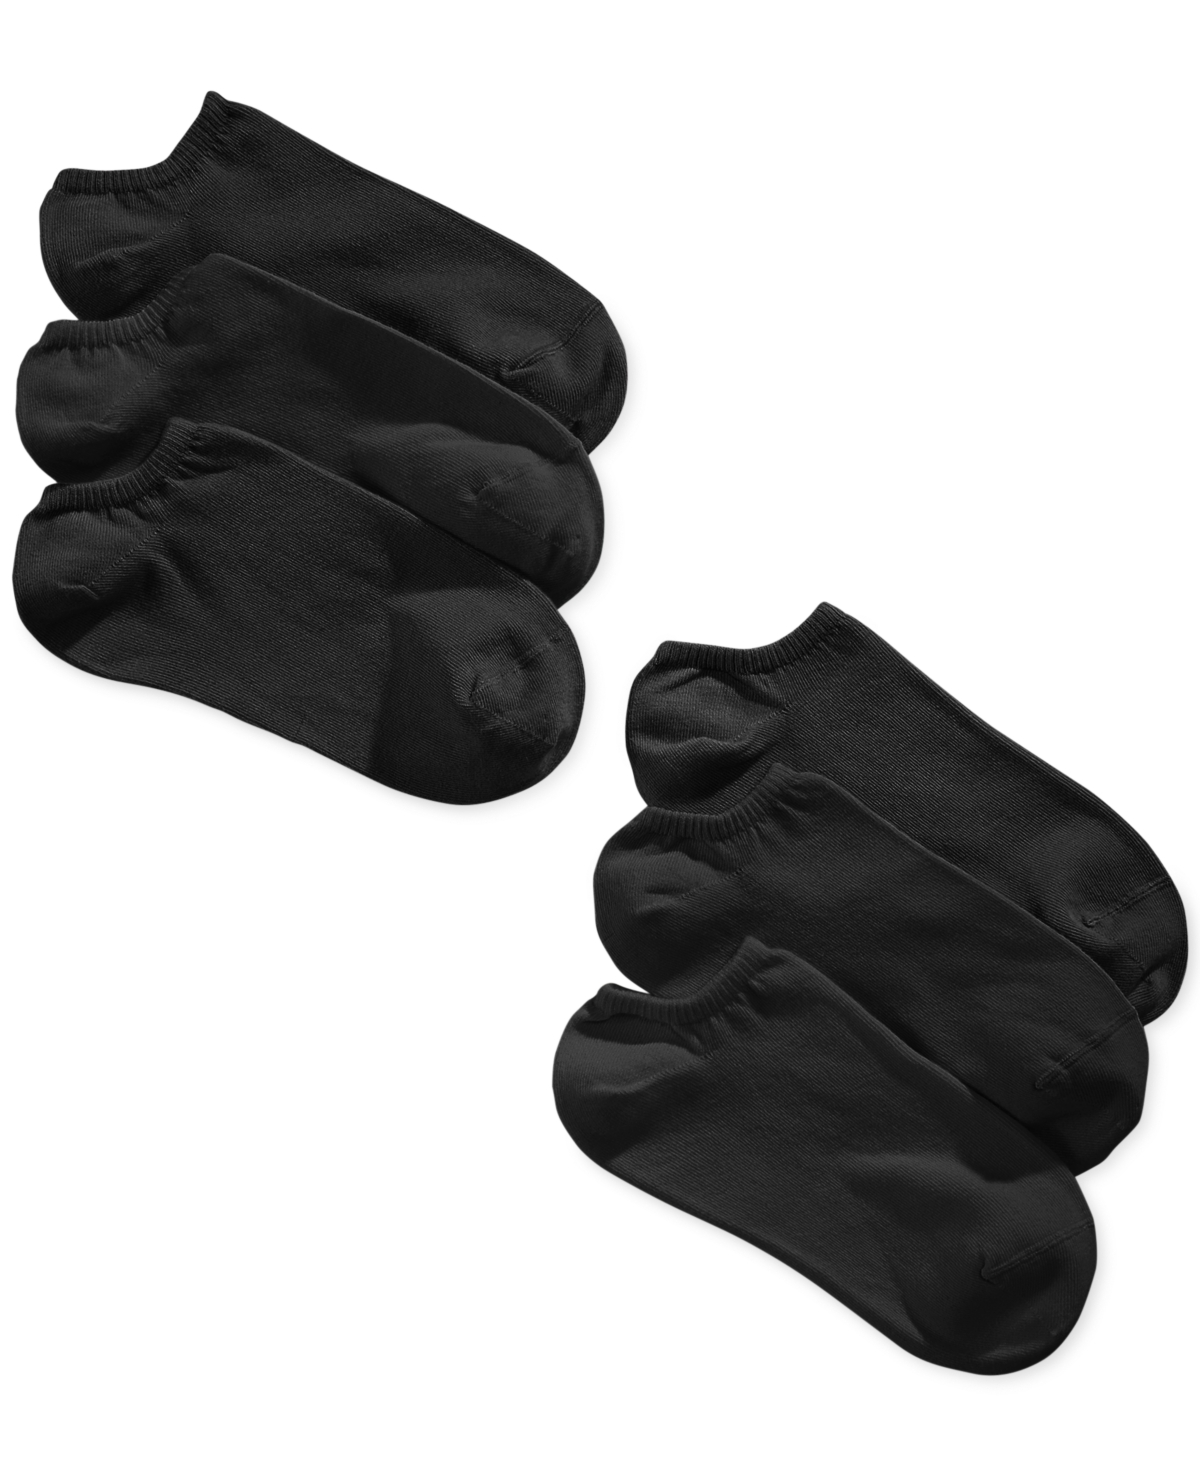 Women's 6 Pack Cotton No Show Socks - Black